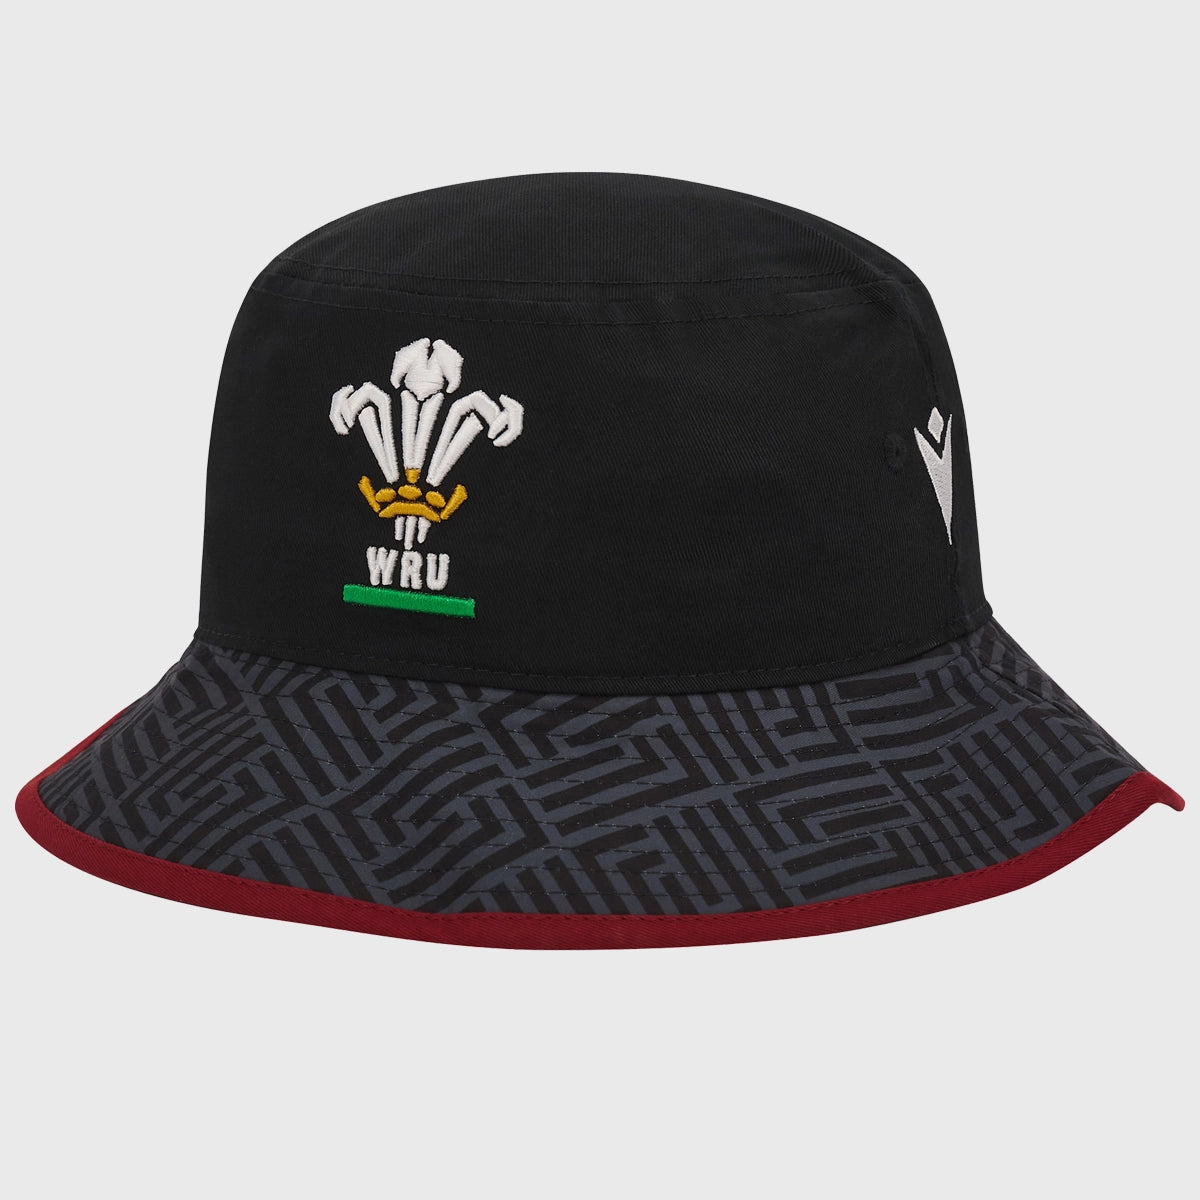 Macron Wales Rugby Bucket Hat Black/Red